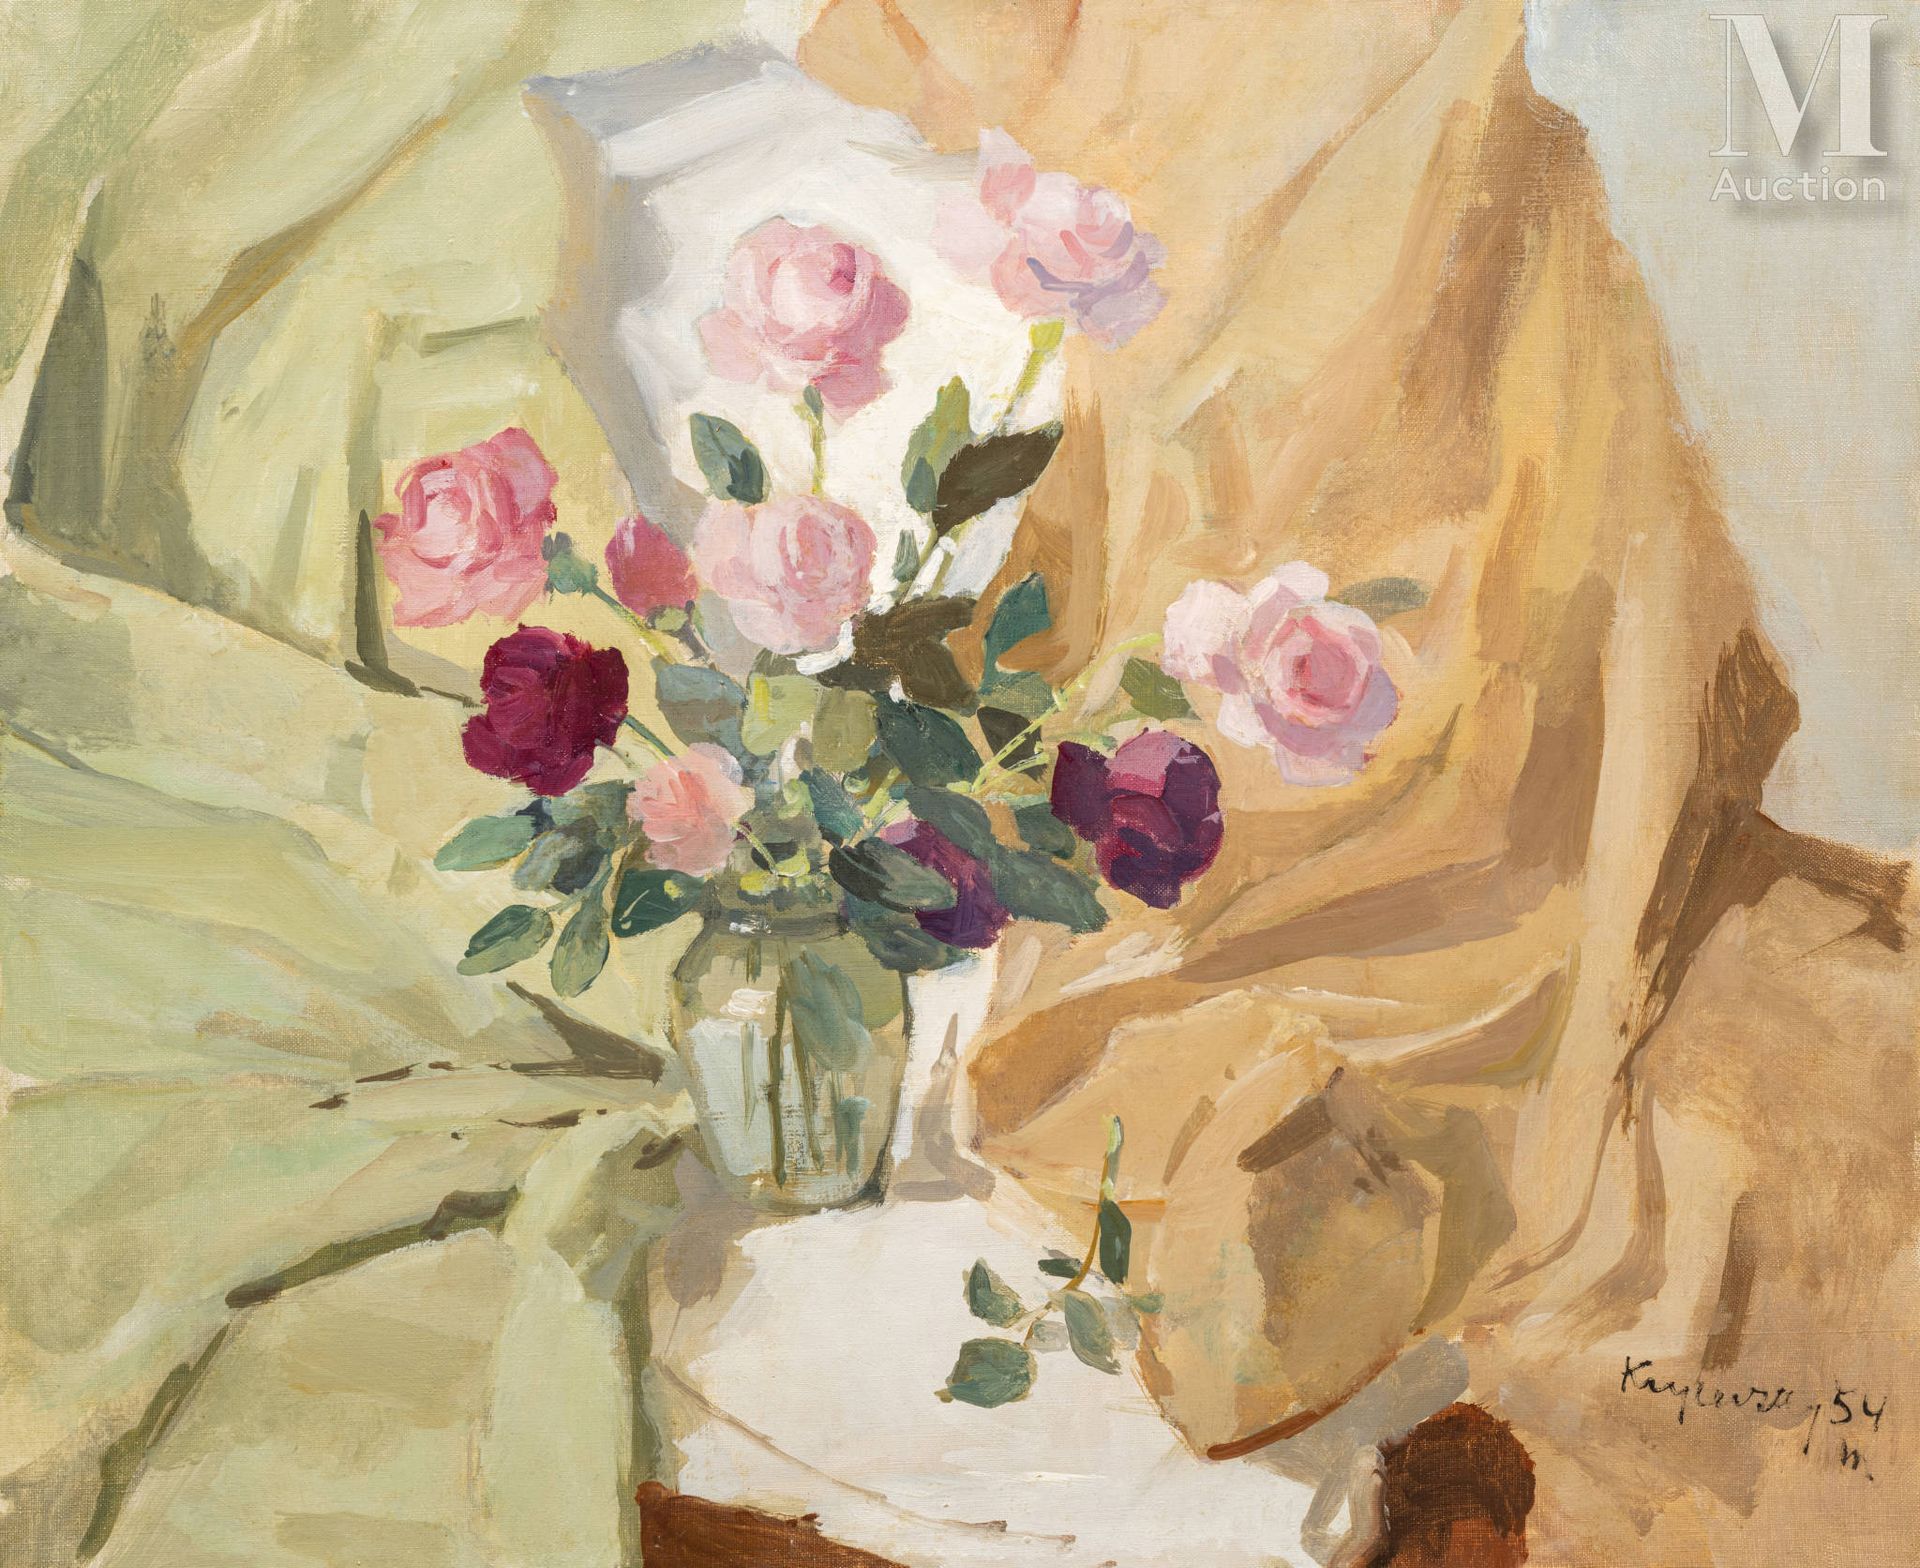 Nicolas KRYCEVSKY (Kharkov 1898 - Paris 1961) 与一束玫瑰花的构图



1954年制造

布面油画

60 x 7&hellip;